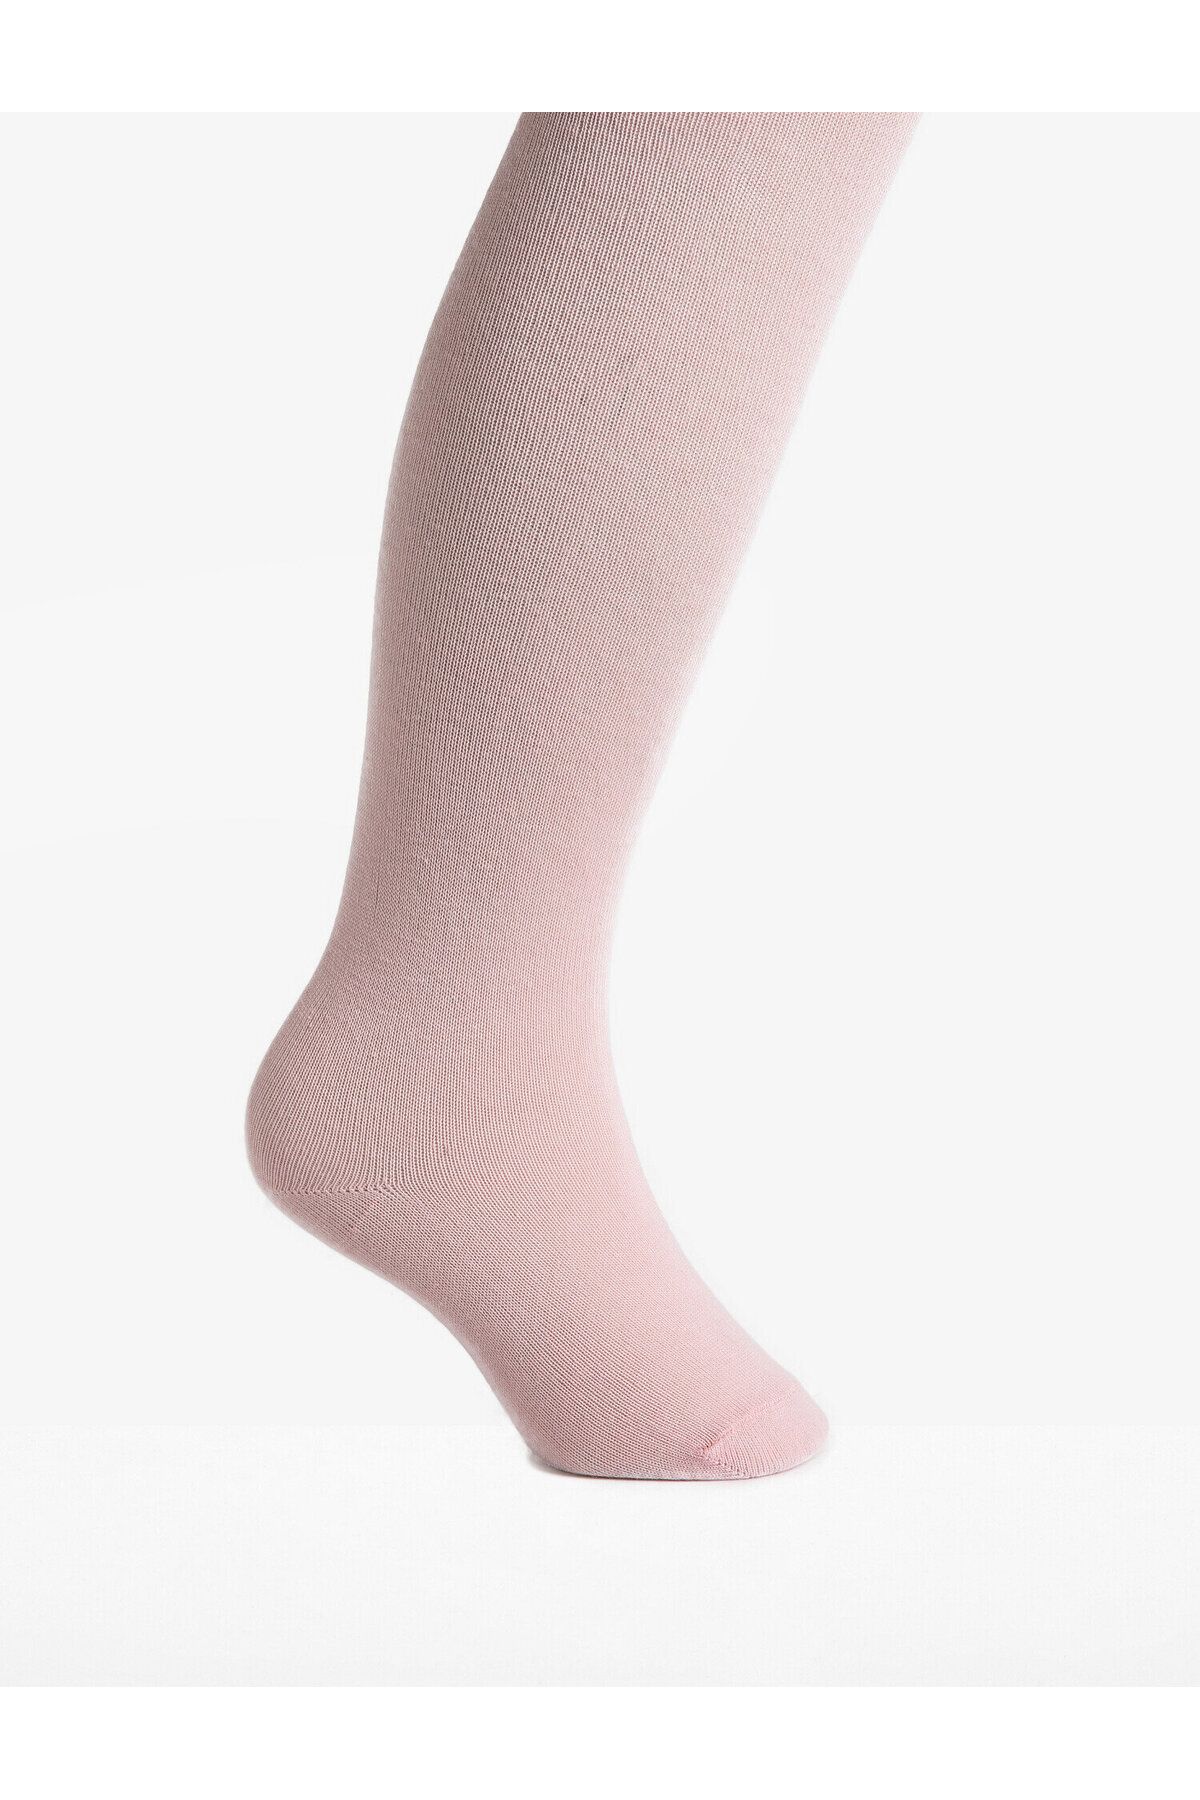 Koton Külotlu Çorap